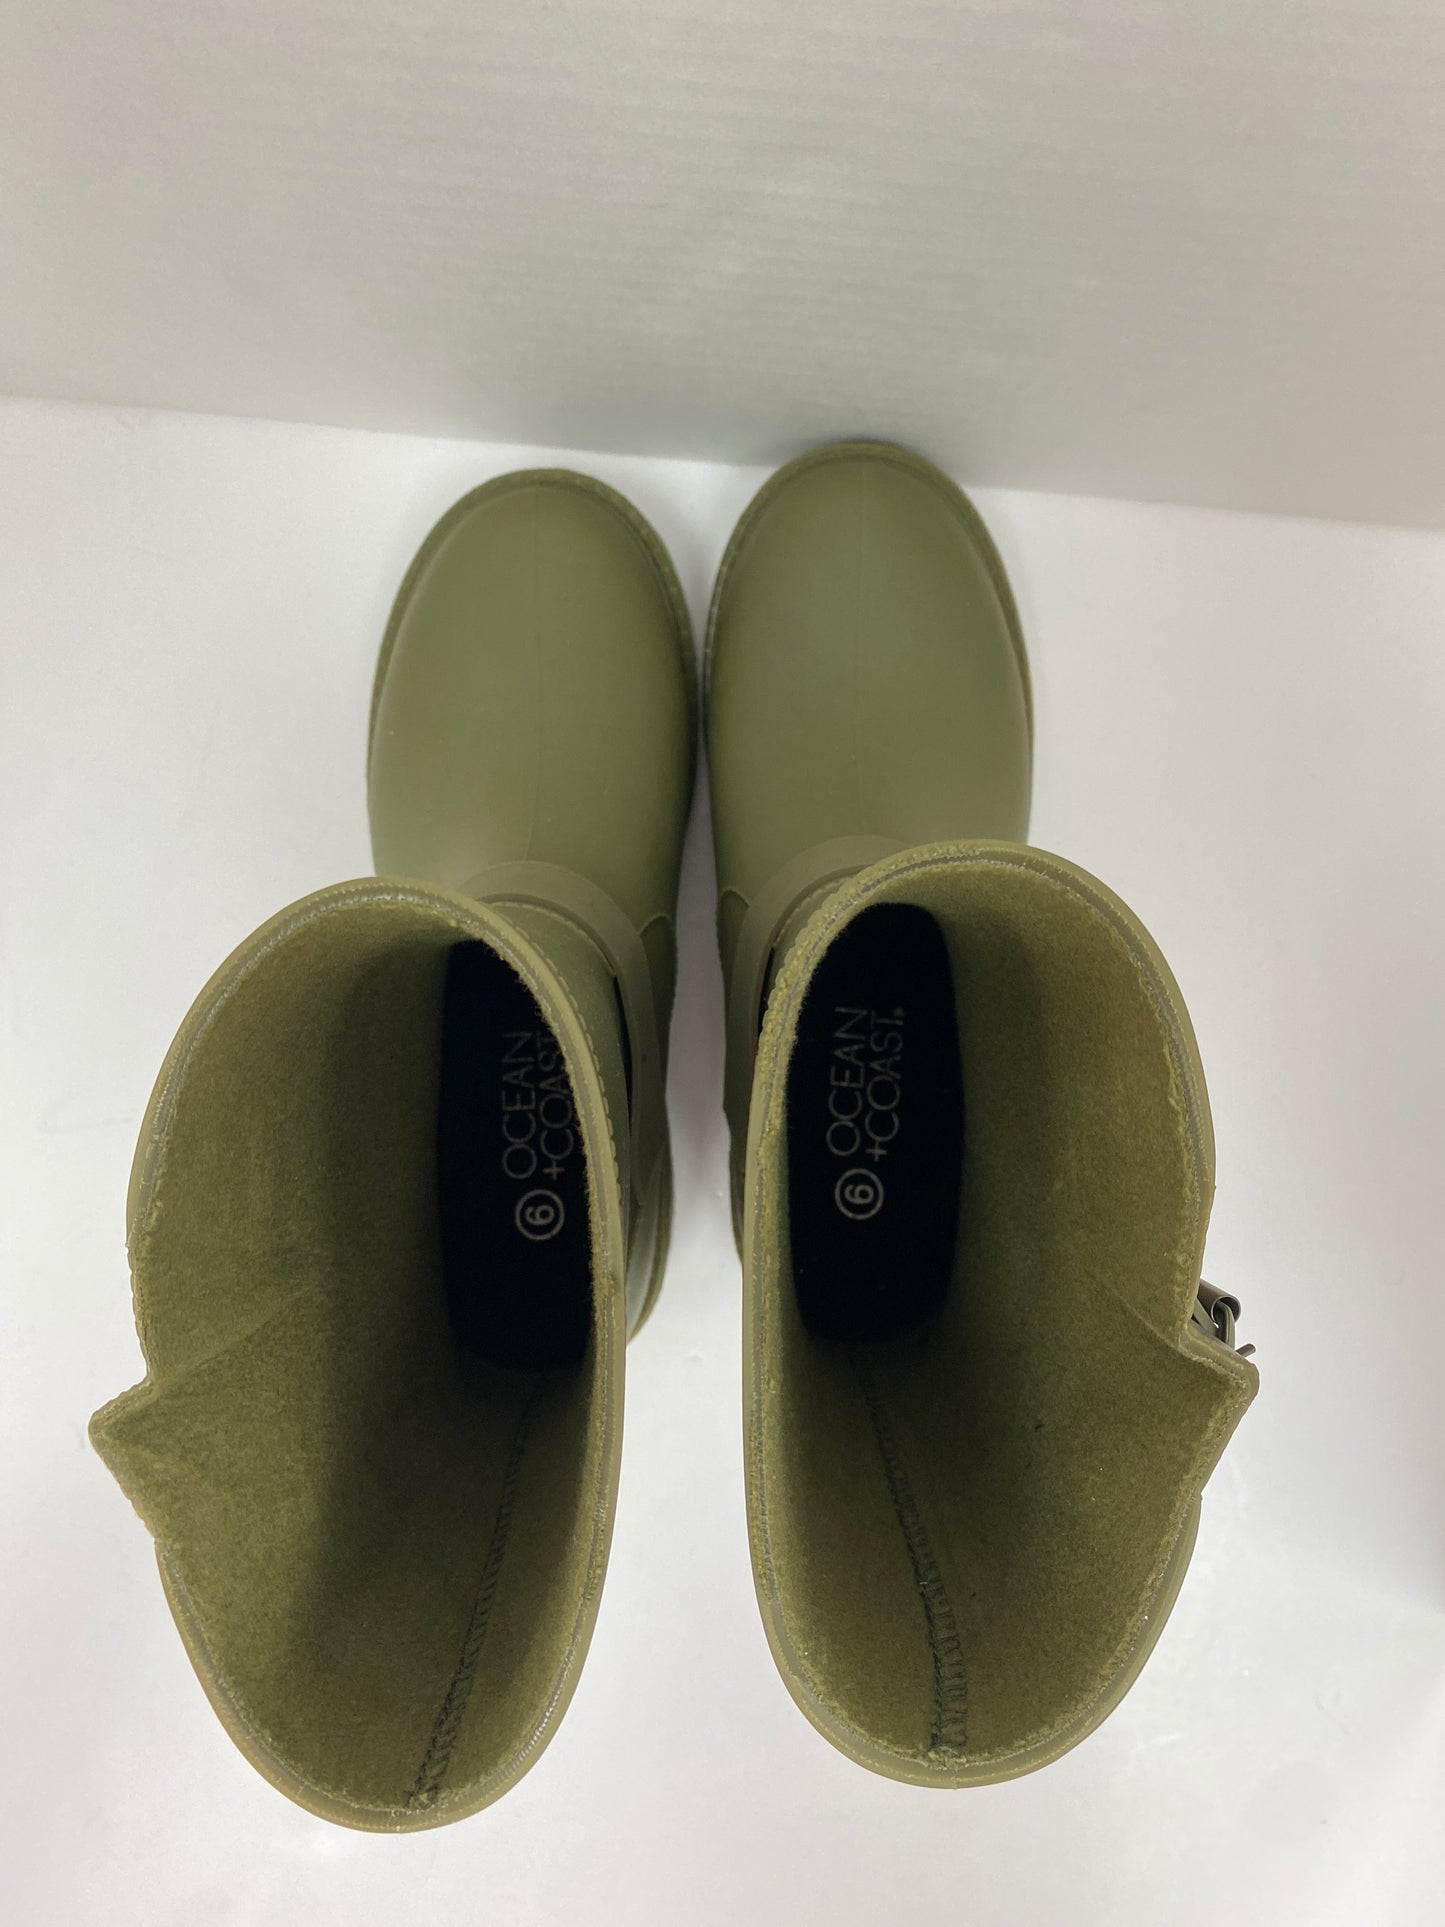 Green Boots Rain Clothes Mentor, Size 6